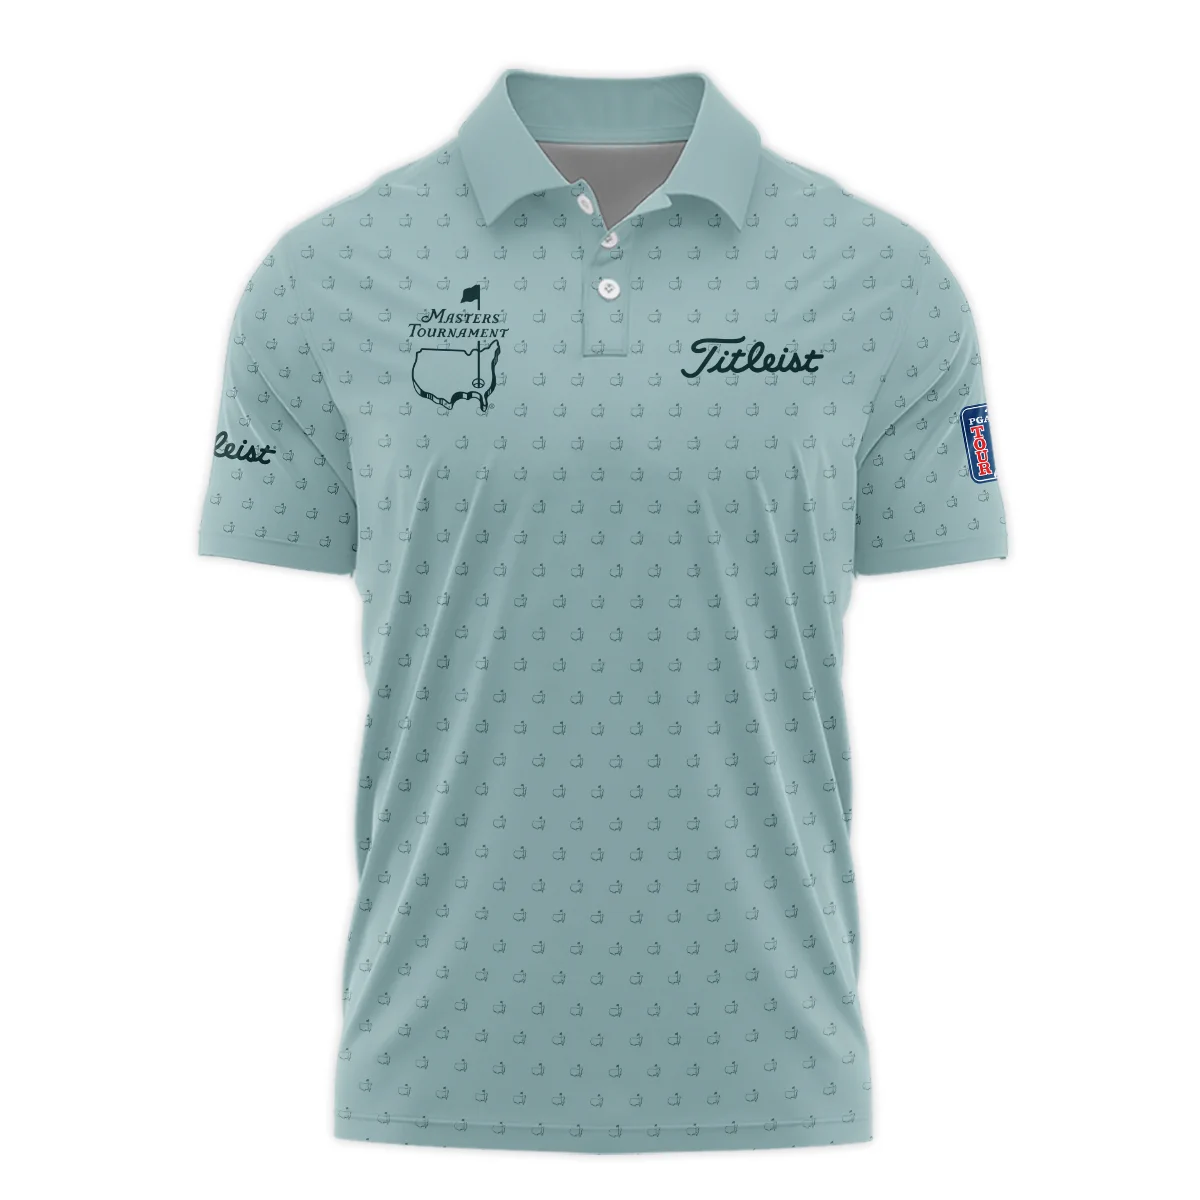 Golf Pattern Masters Tournament Titleist Sleeveless Jacket Cyan Pattern All Over Print Sleeveless Jacket